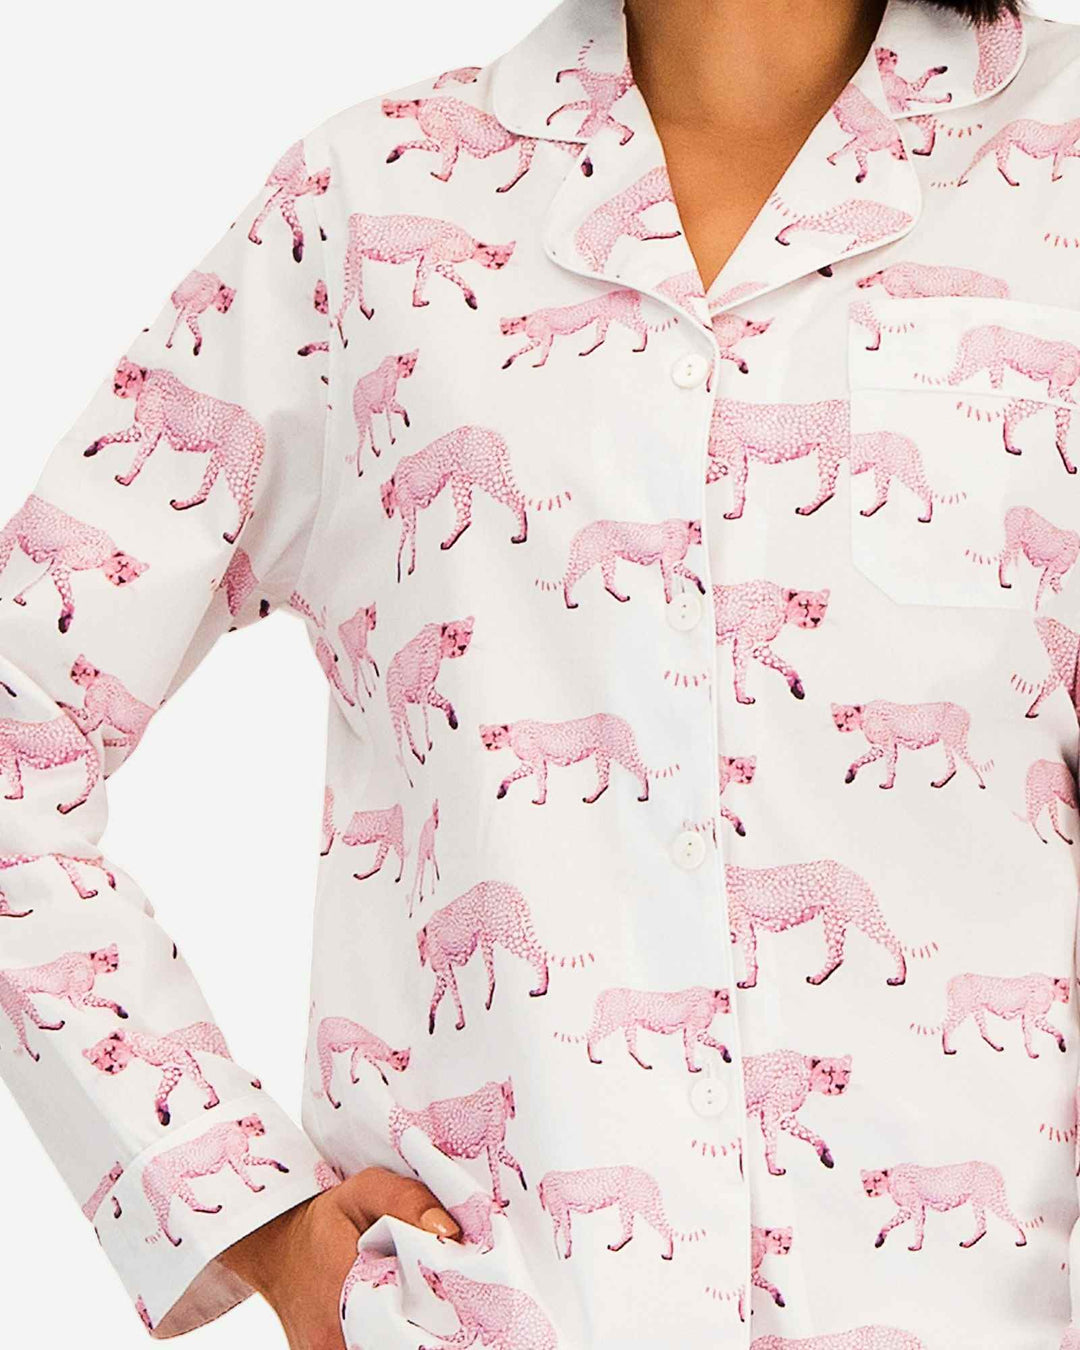 Womens cotton pyjamas shirt - Pink cheetah on white